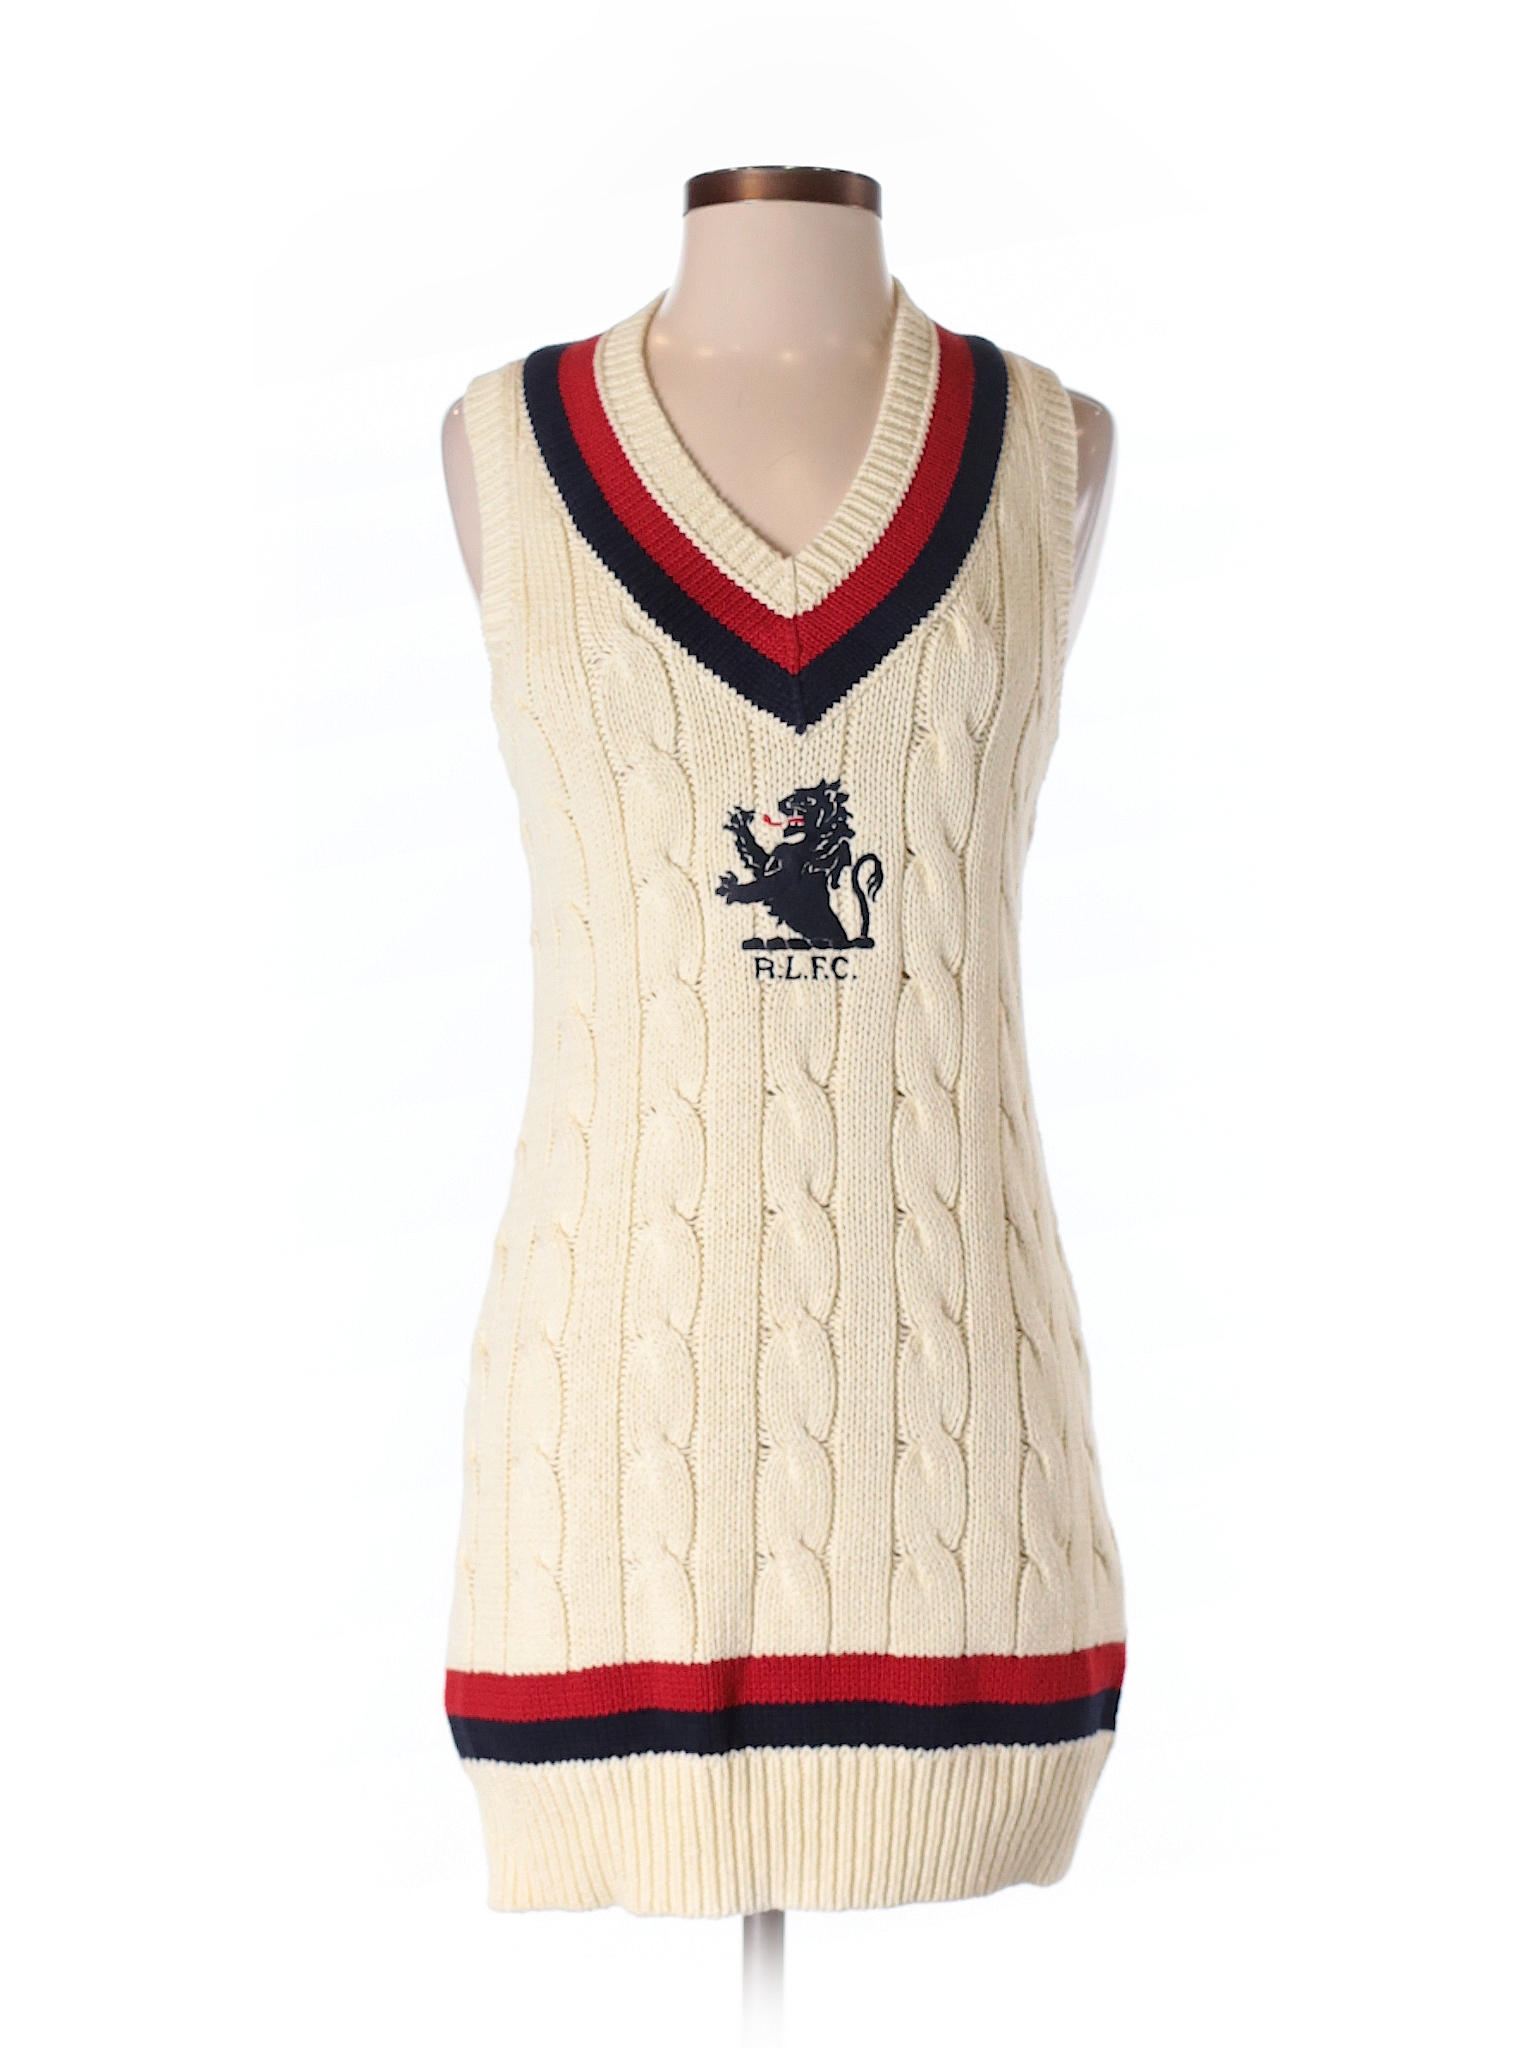 Ralph Lauren Rugby 100% Cotton Solid Tan Sweater Vest Size S - 91% off |  thredUP